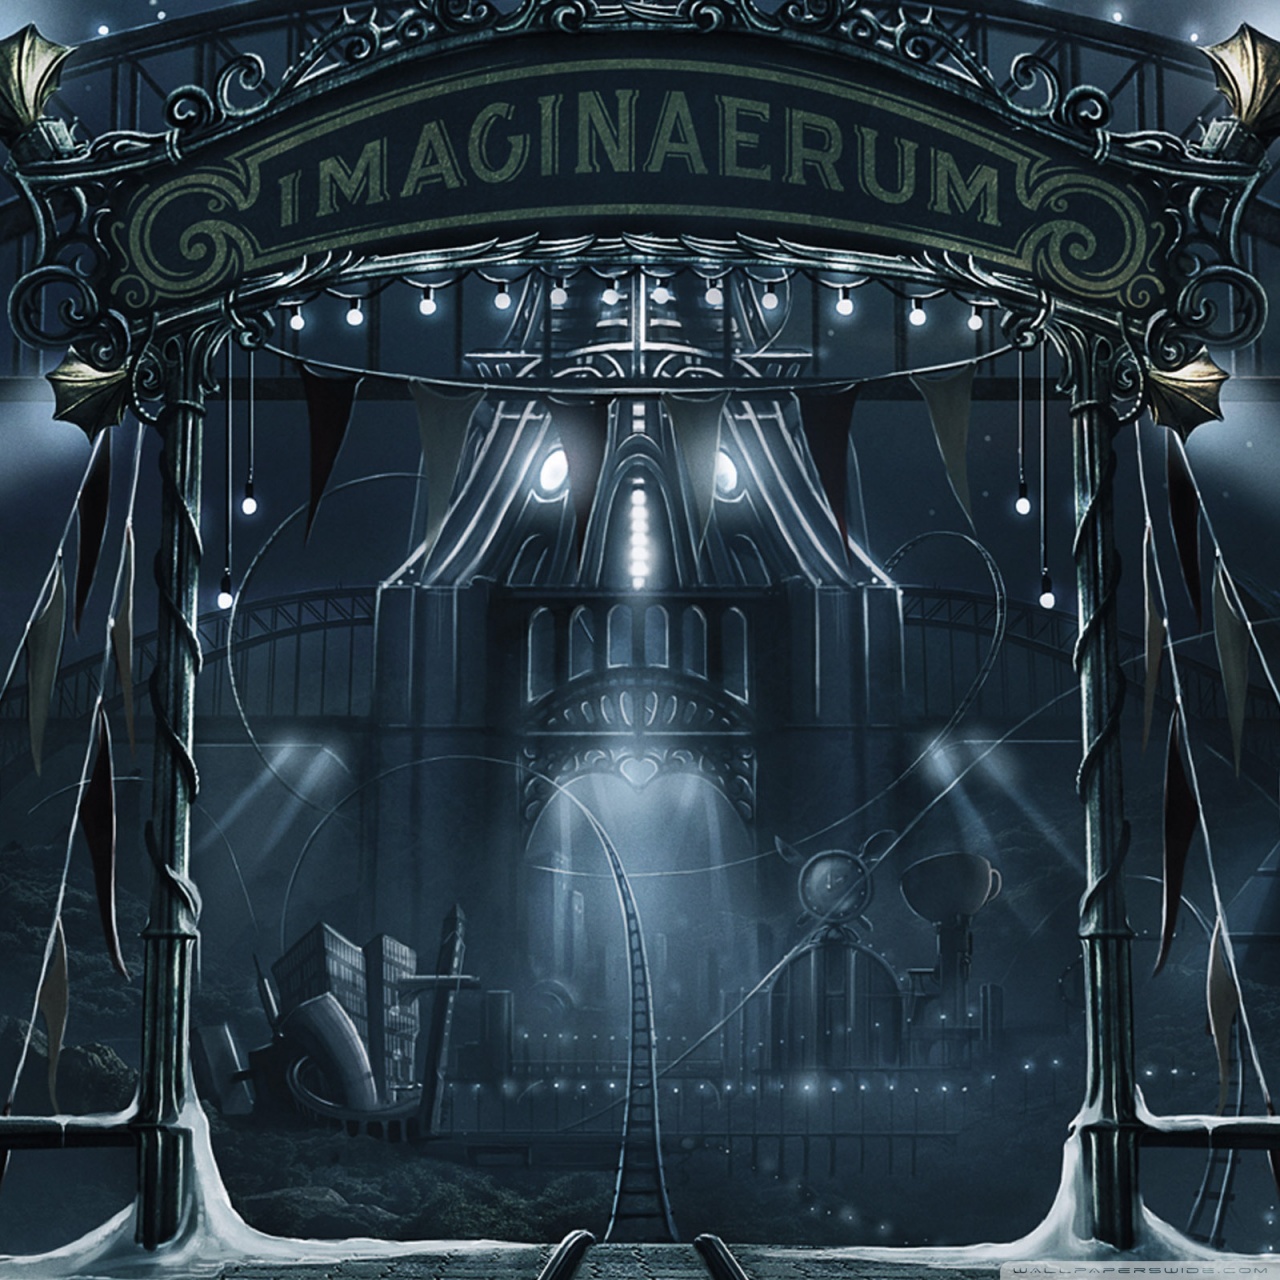 Imaginaerum Nightwish 4k HD Desktop Wallpaper For Ultra